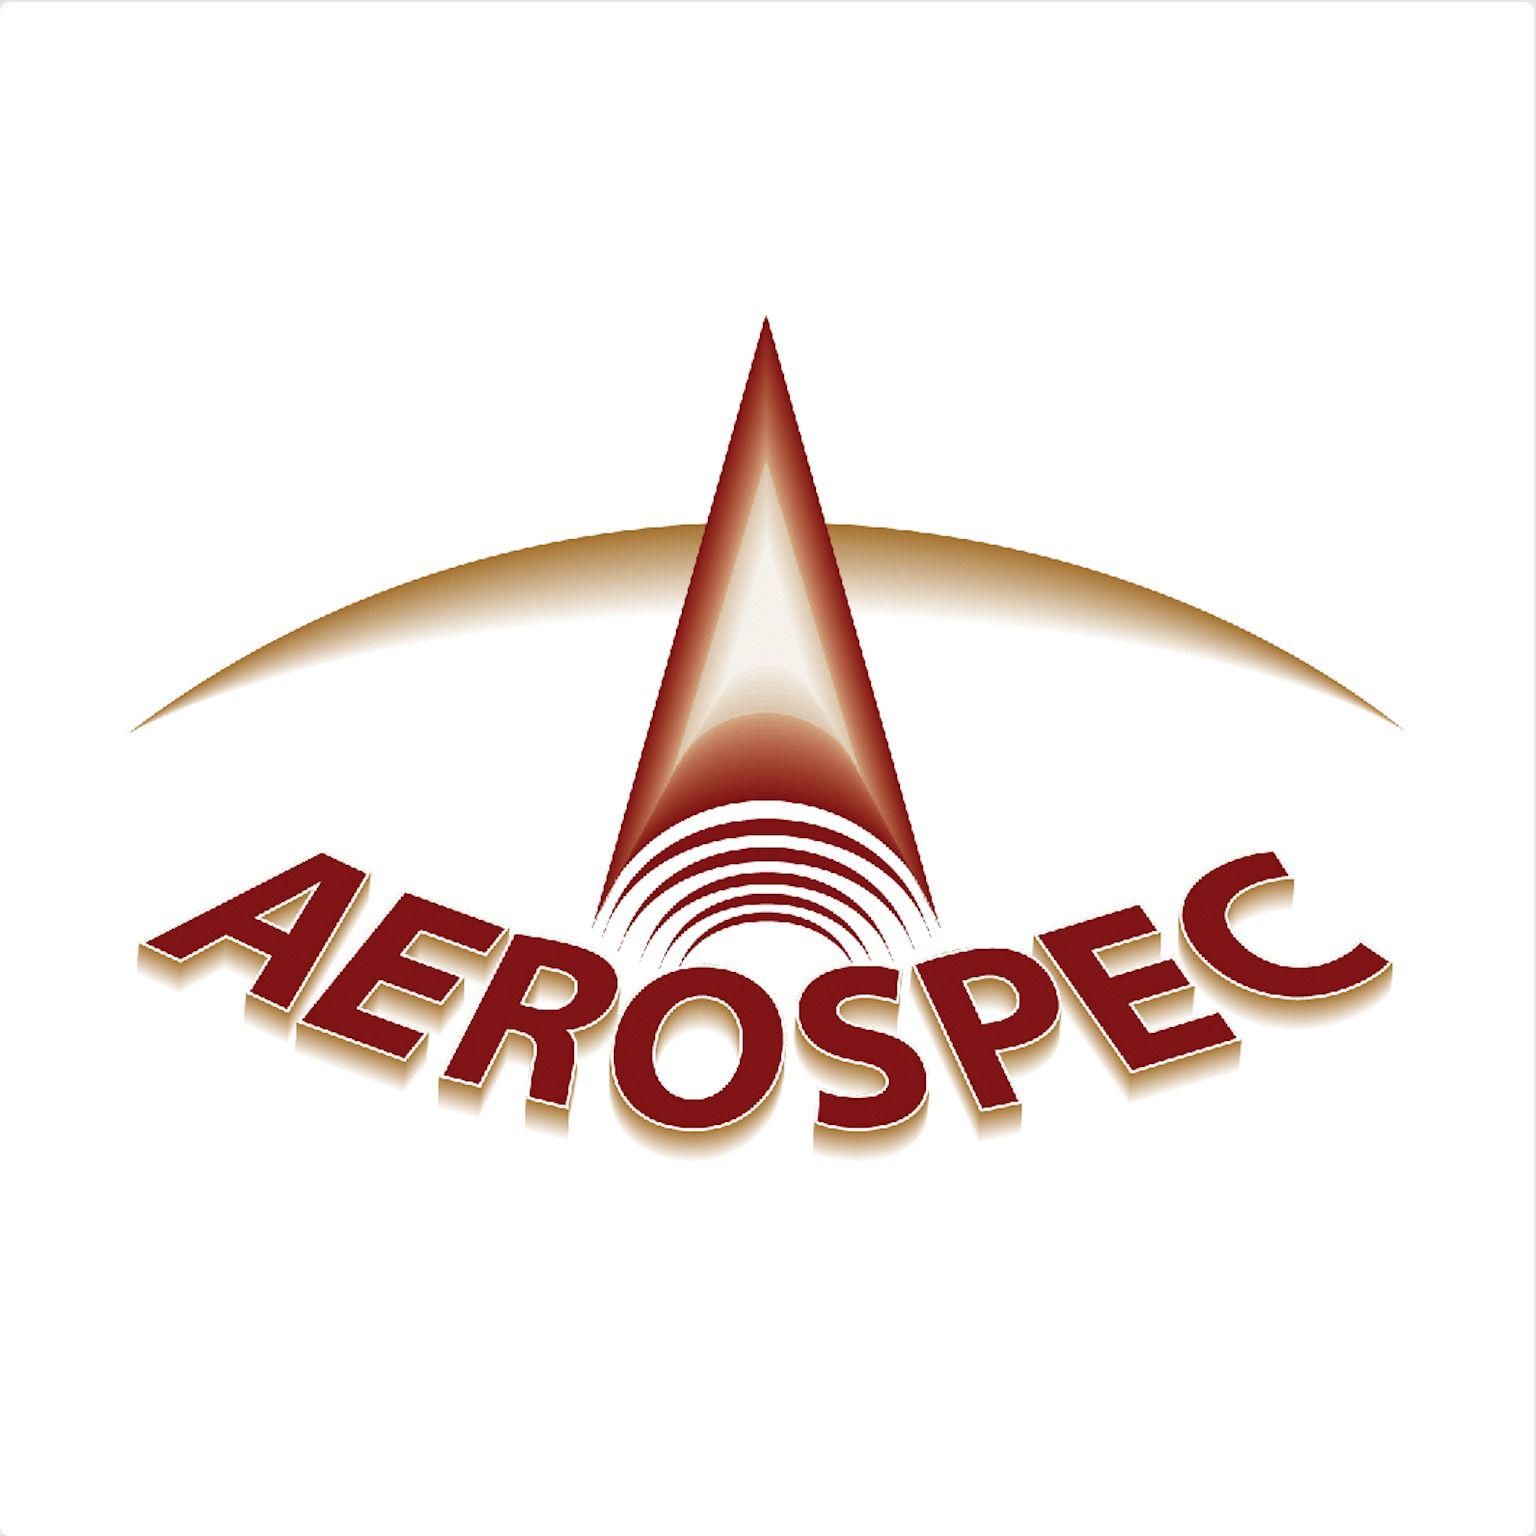 Aerospec Supplies Pte Ltd